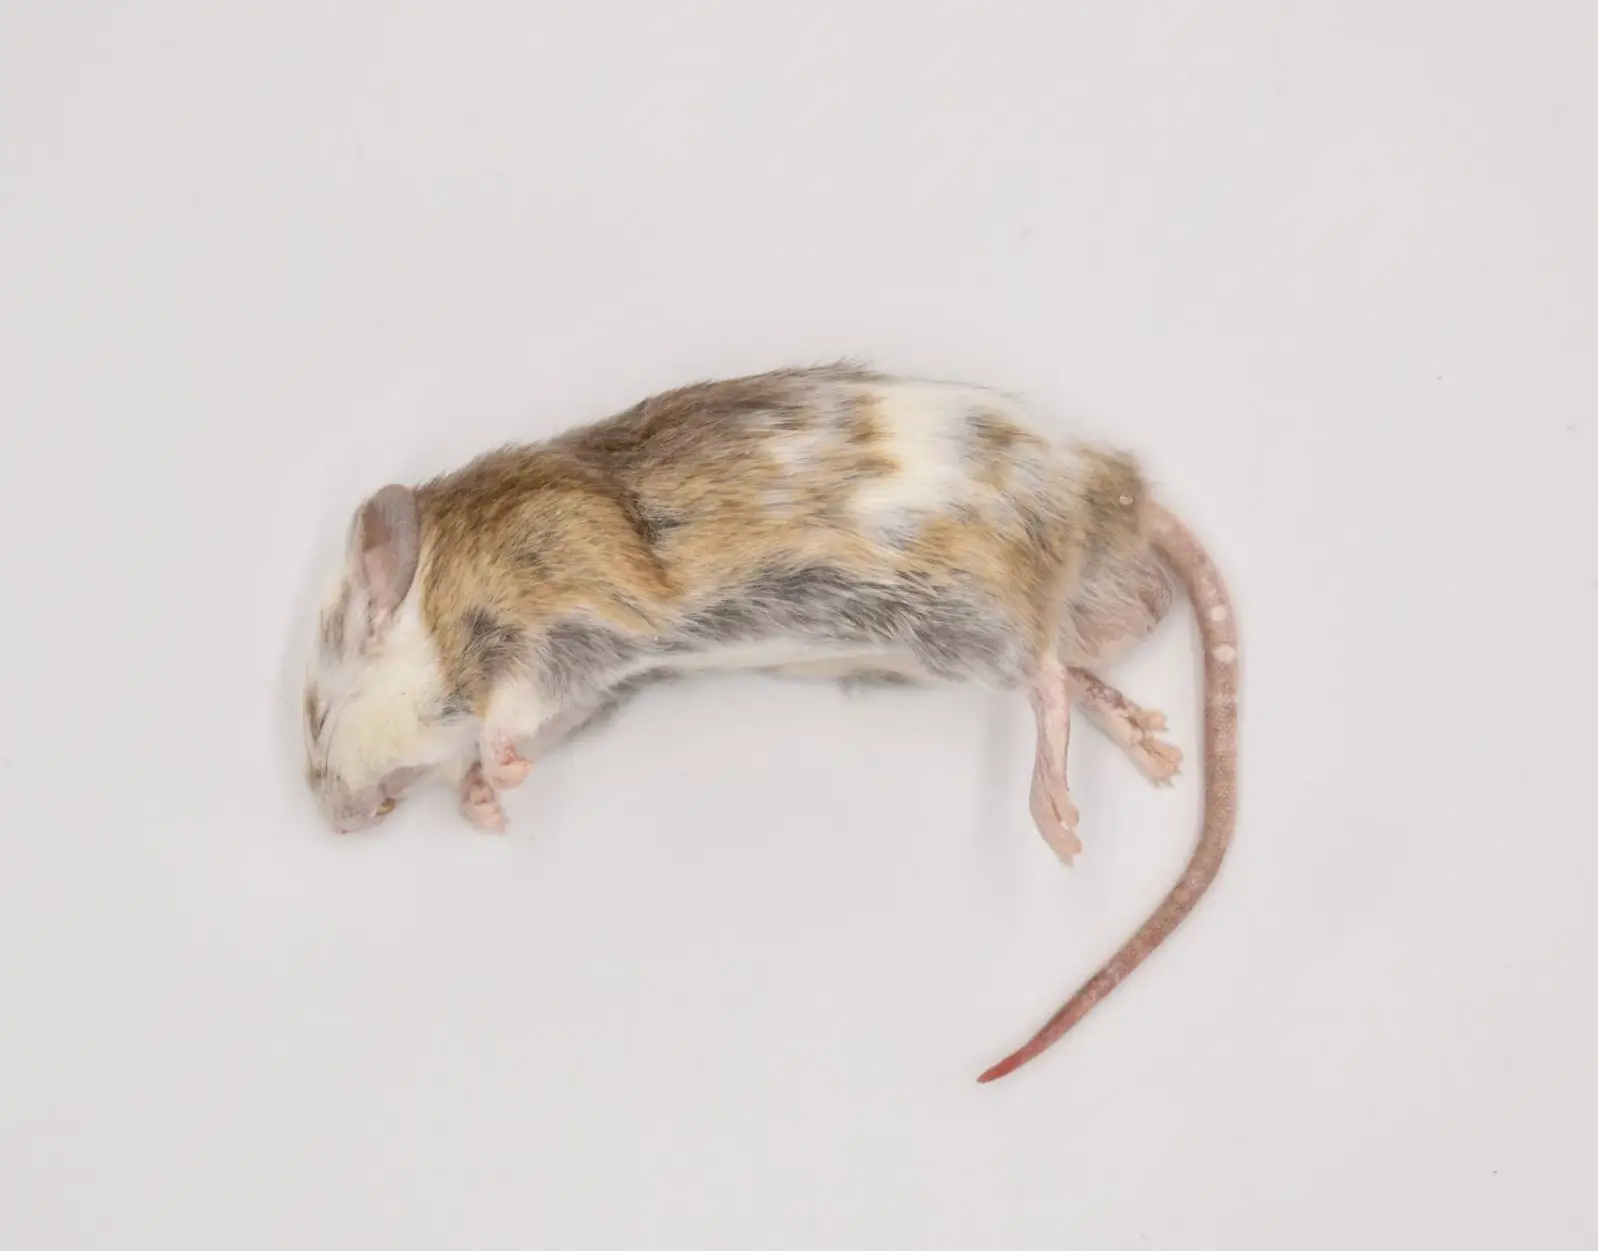 Frozen Multimammate mouse